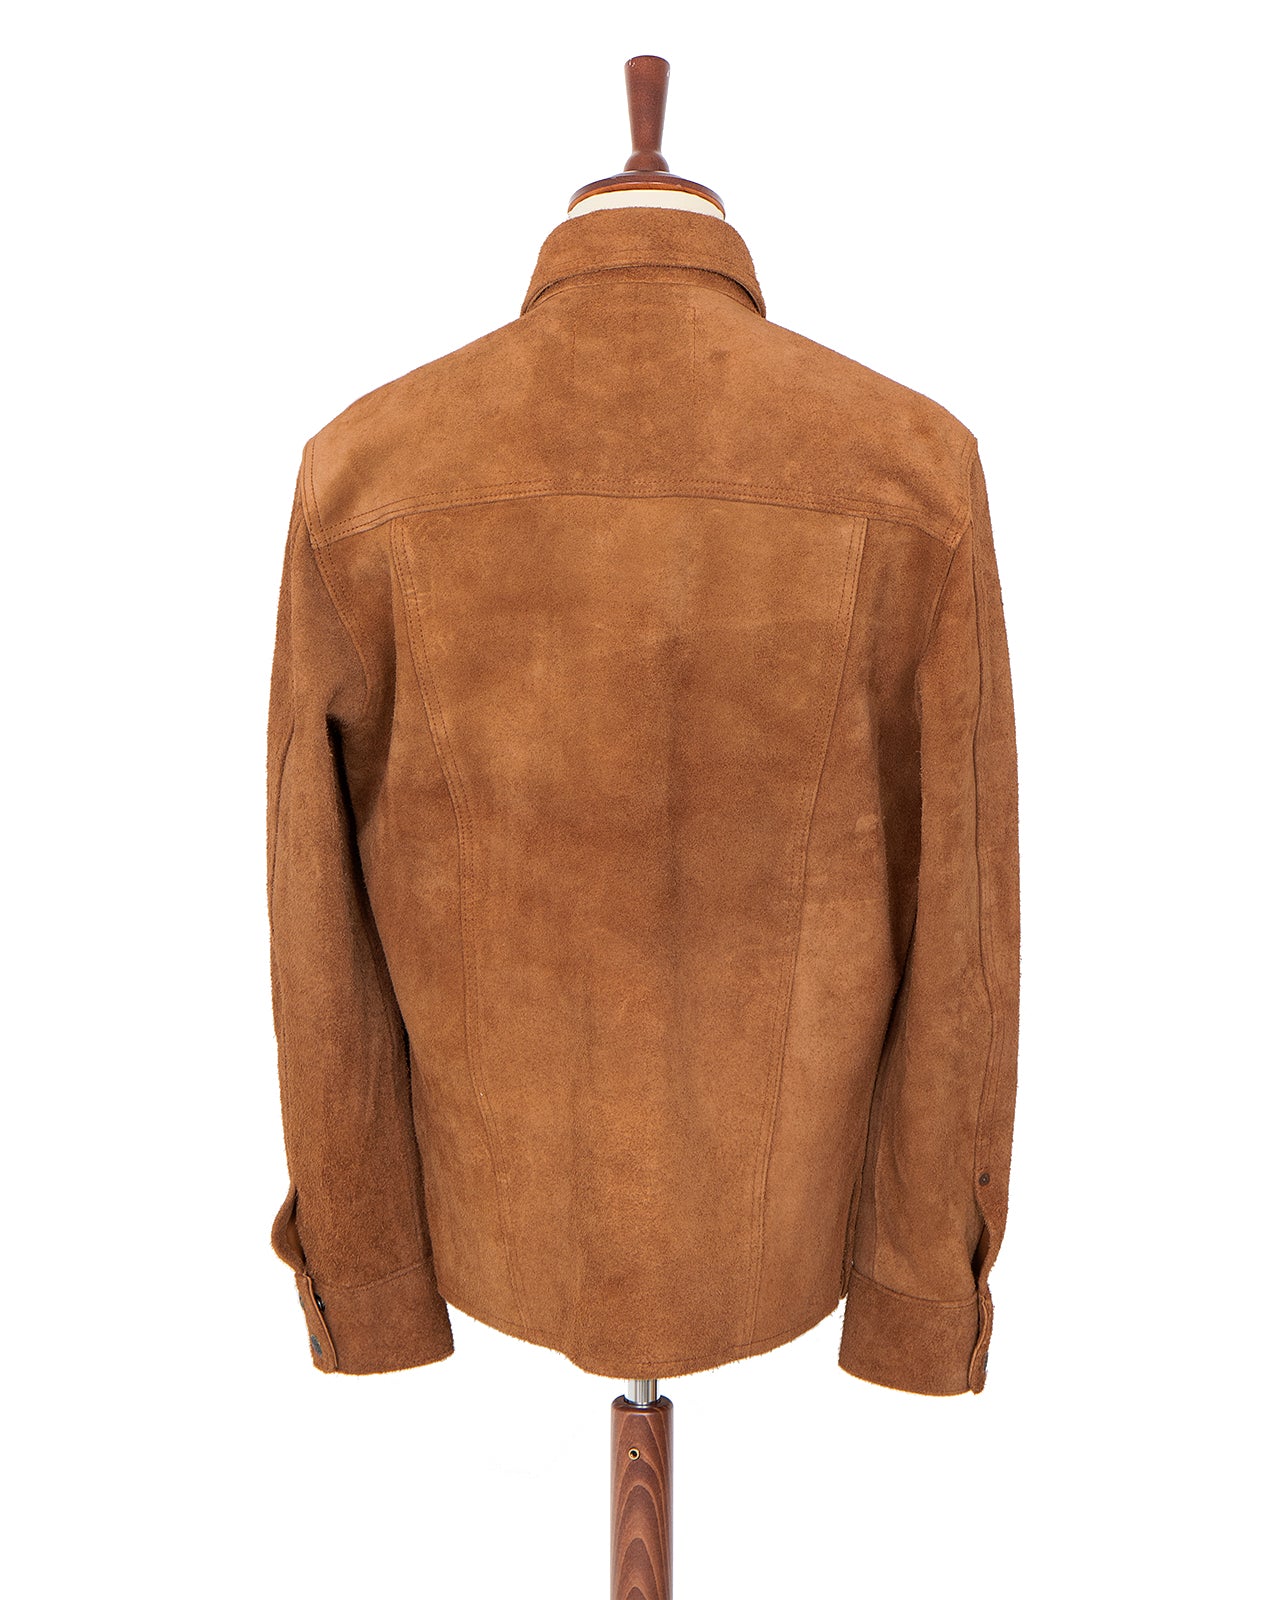 Indigofera Copeland Shirt, Rough Out Leather, Cognac